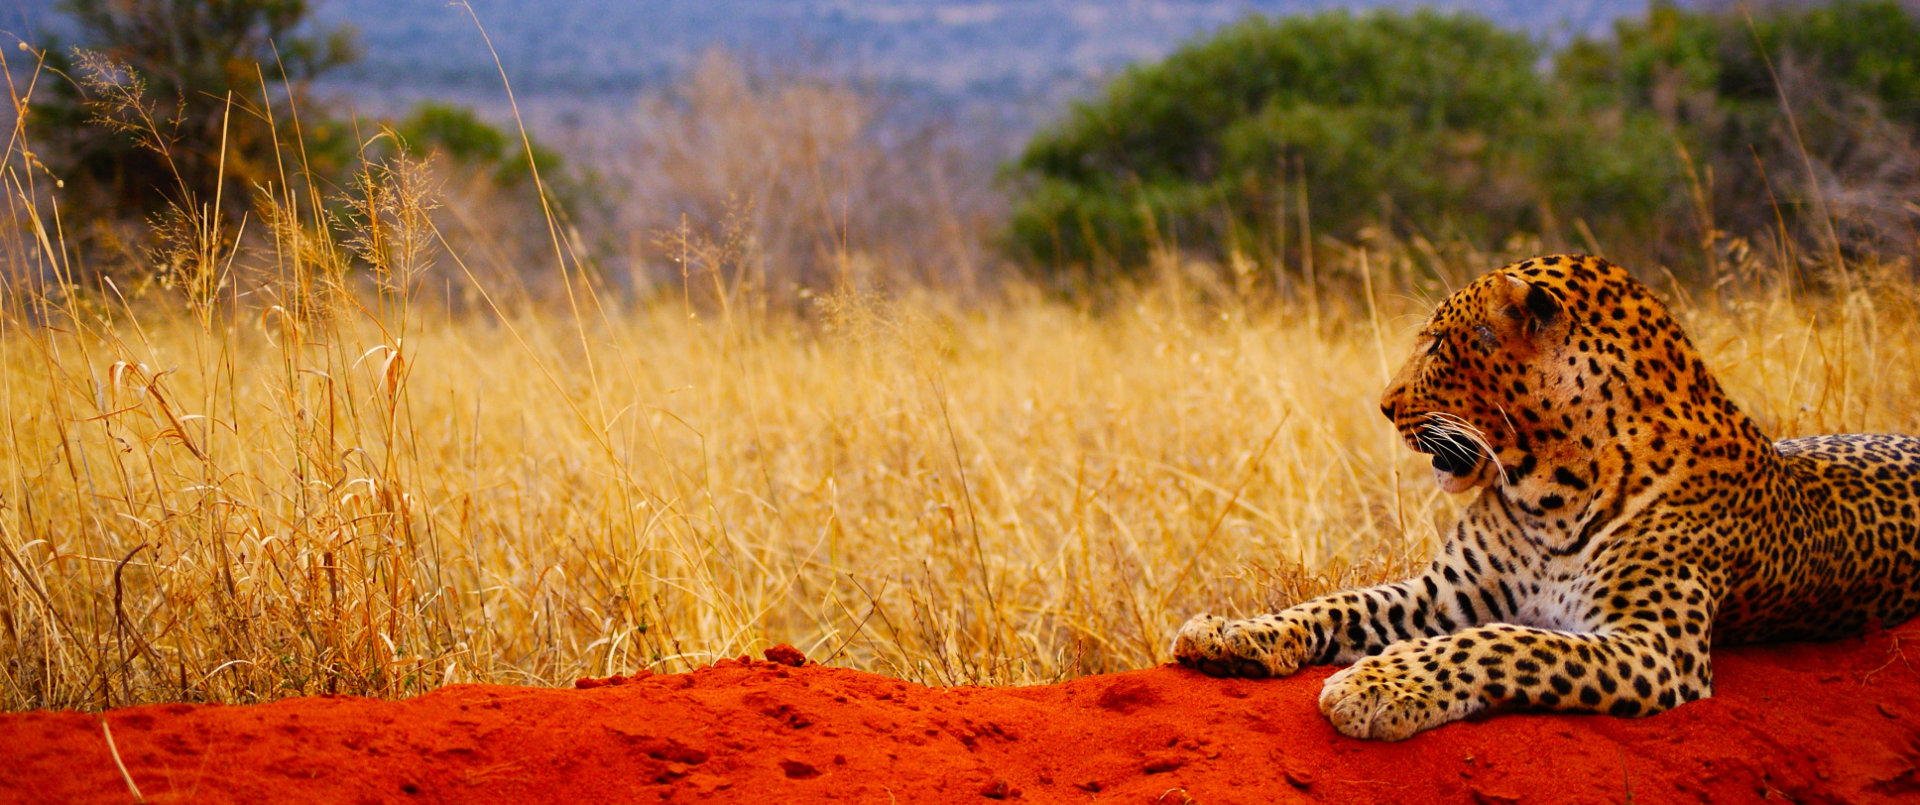 safaris-fred-homepage-safari-kenya-tanzanie-3